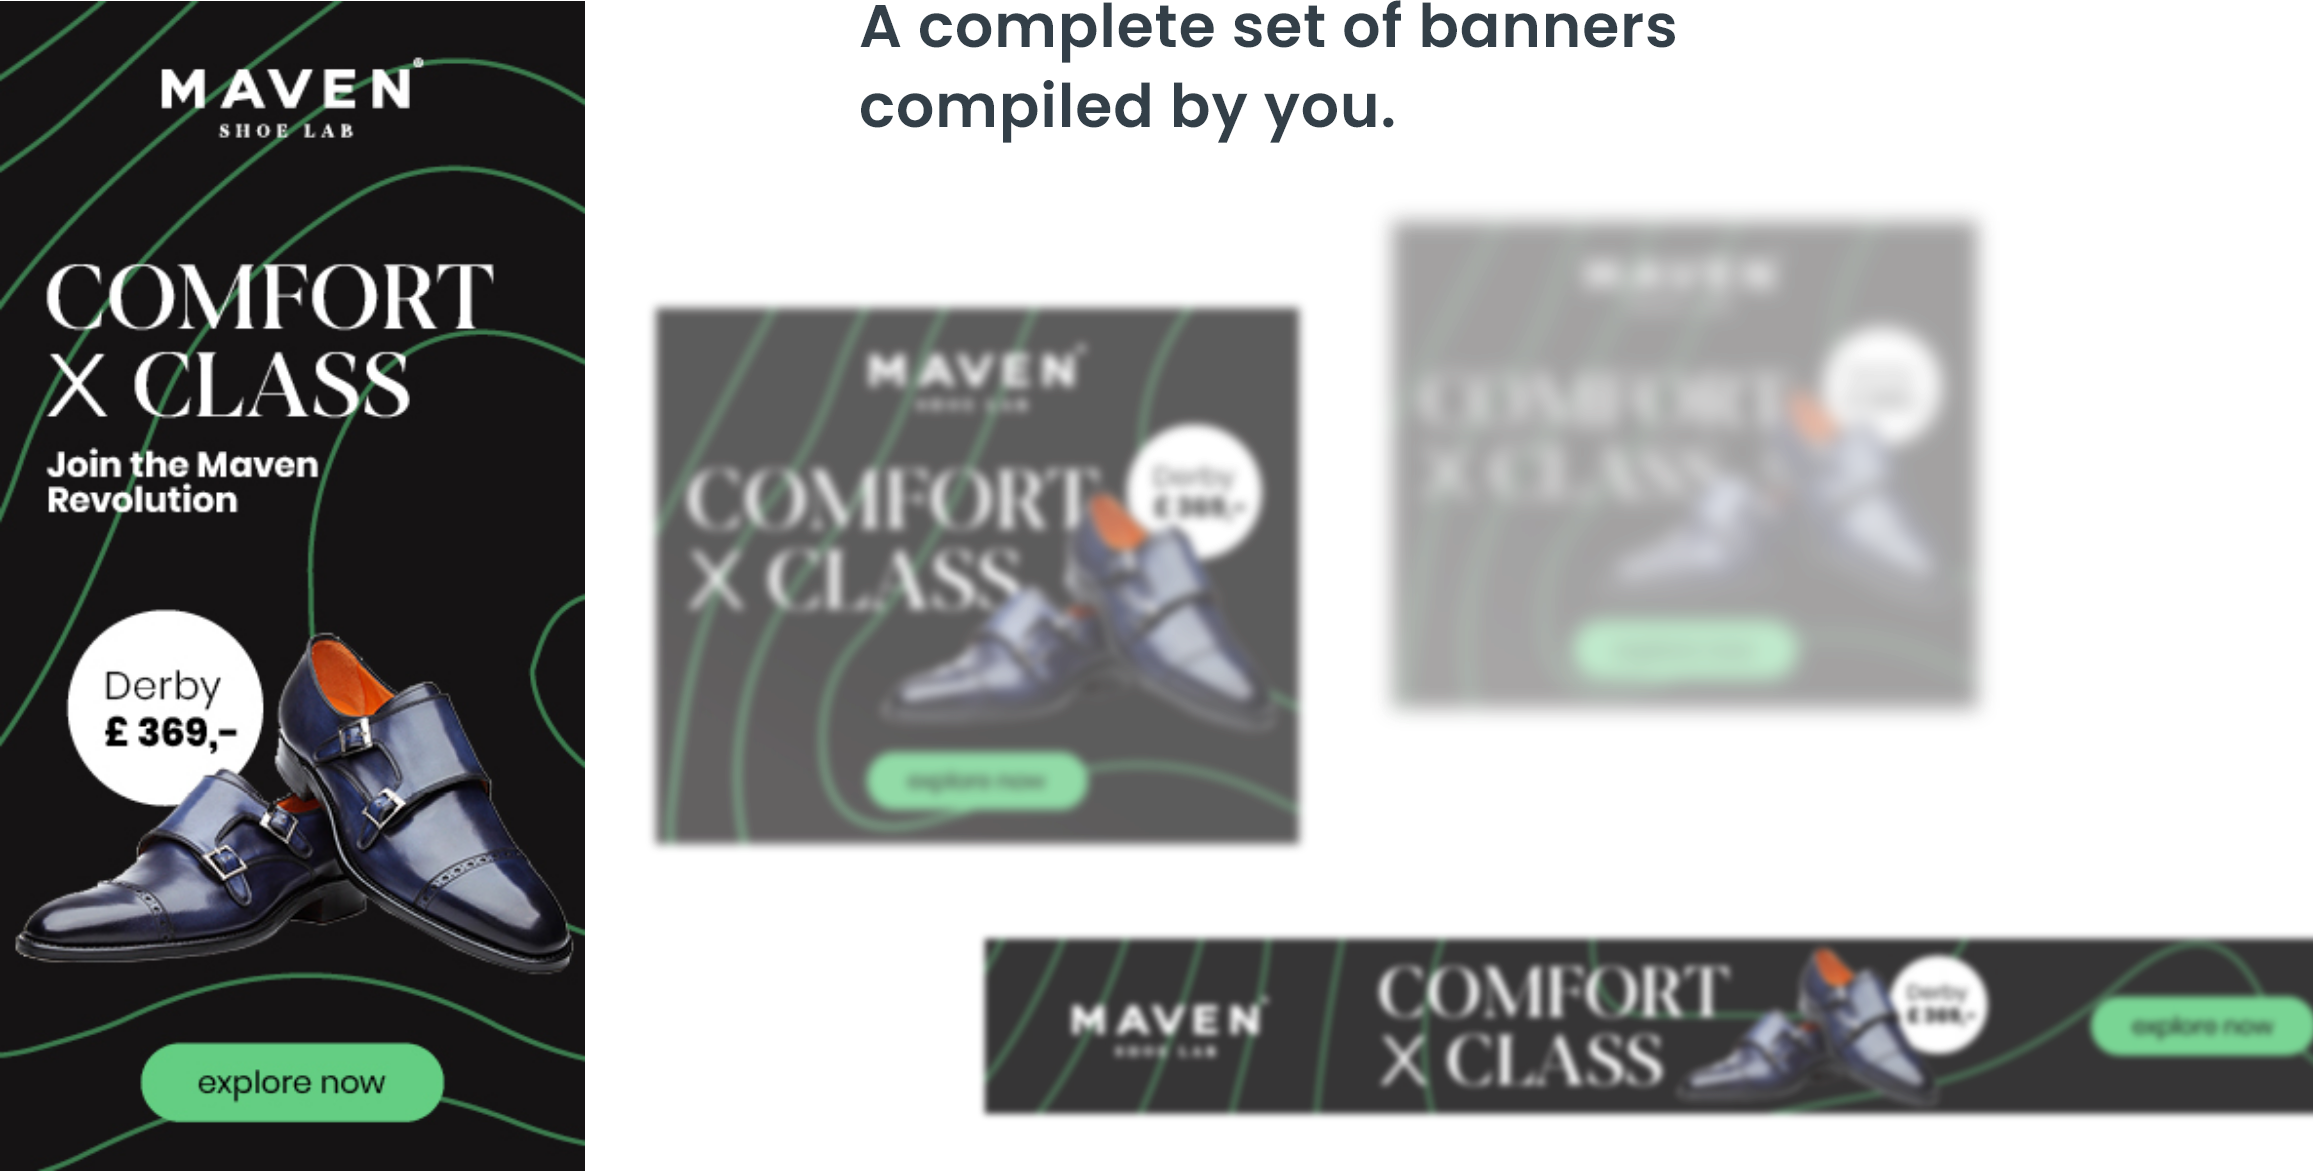 maven banner set